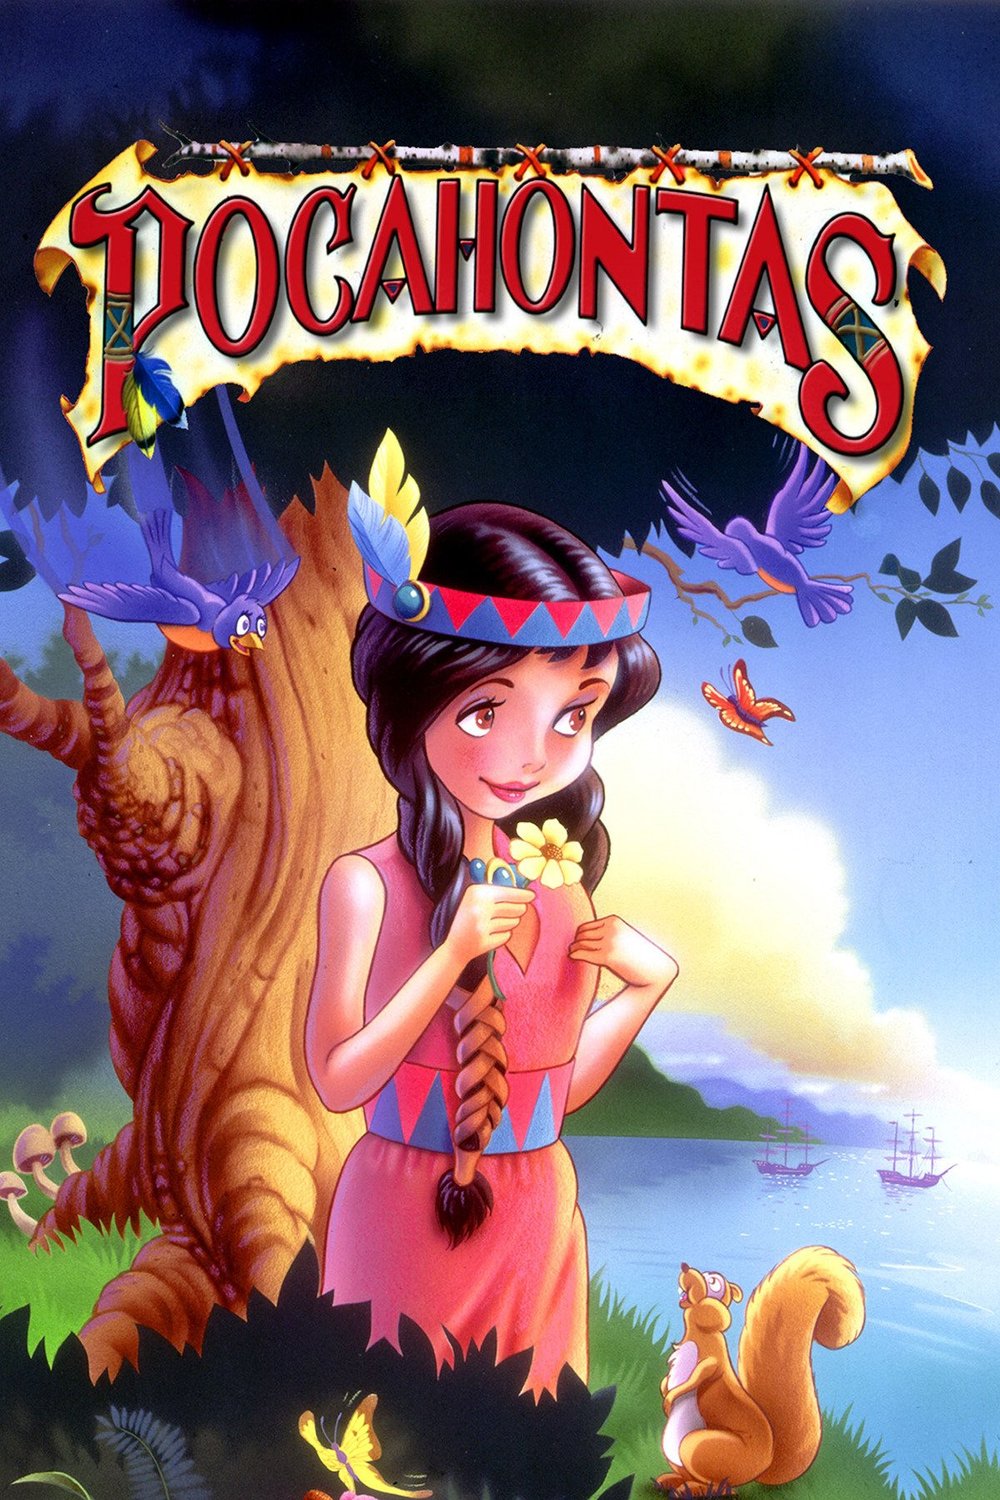 Poster of the movie Pocahontas